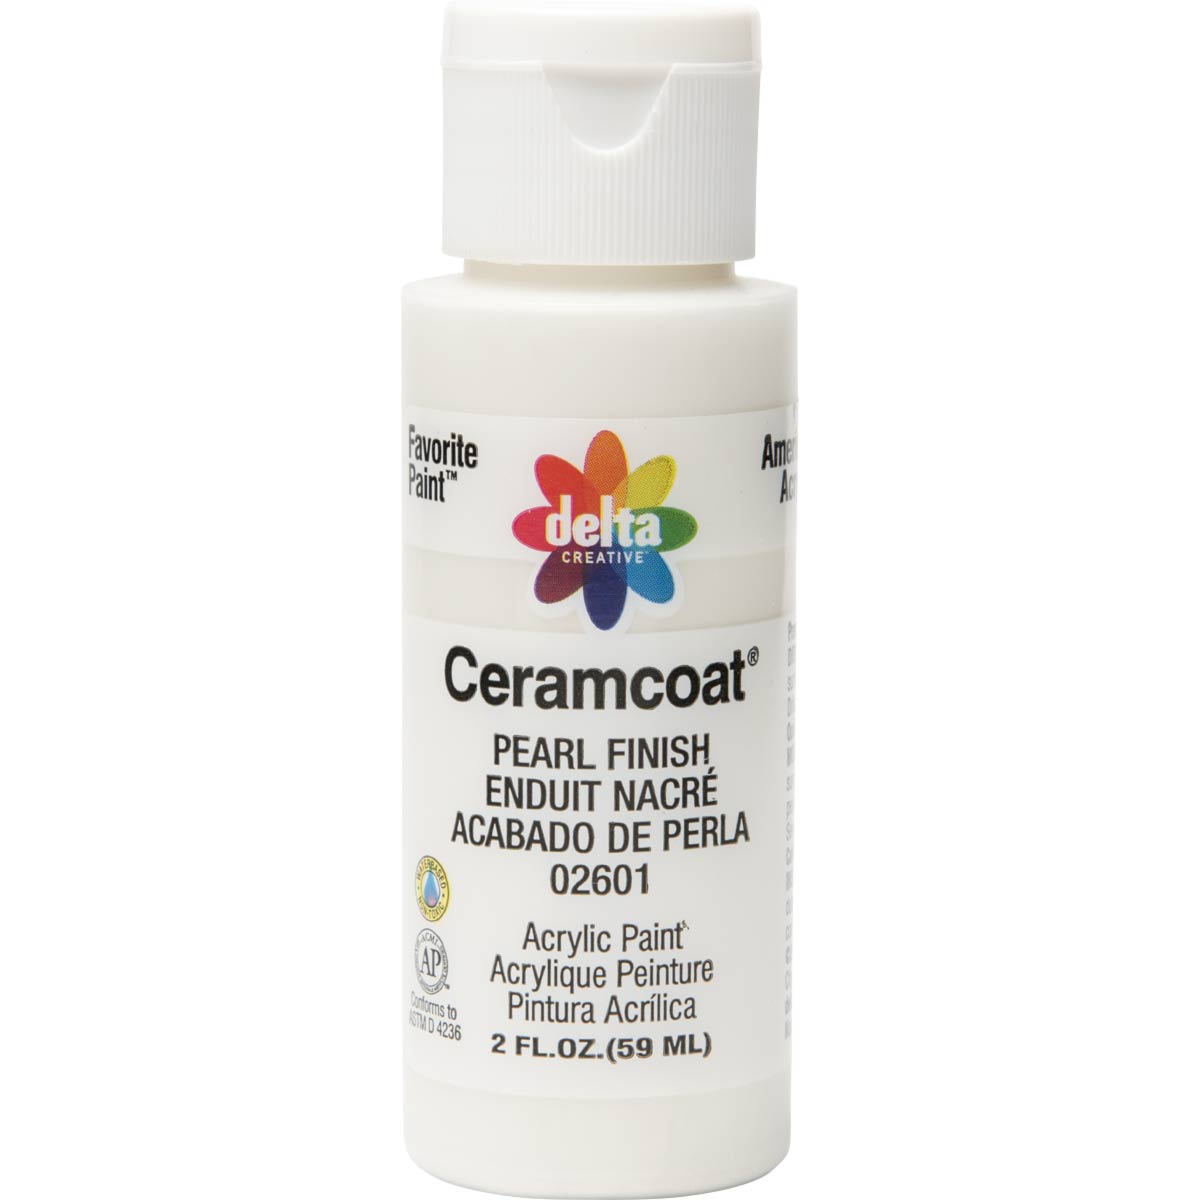 Delta Ceramcoat ® Acrylic Paint - Pearl Finish, 2 oz. - 026010202W